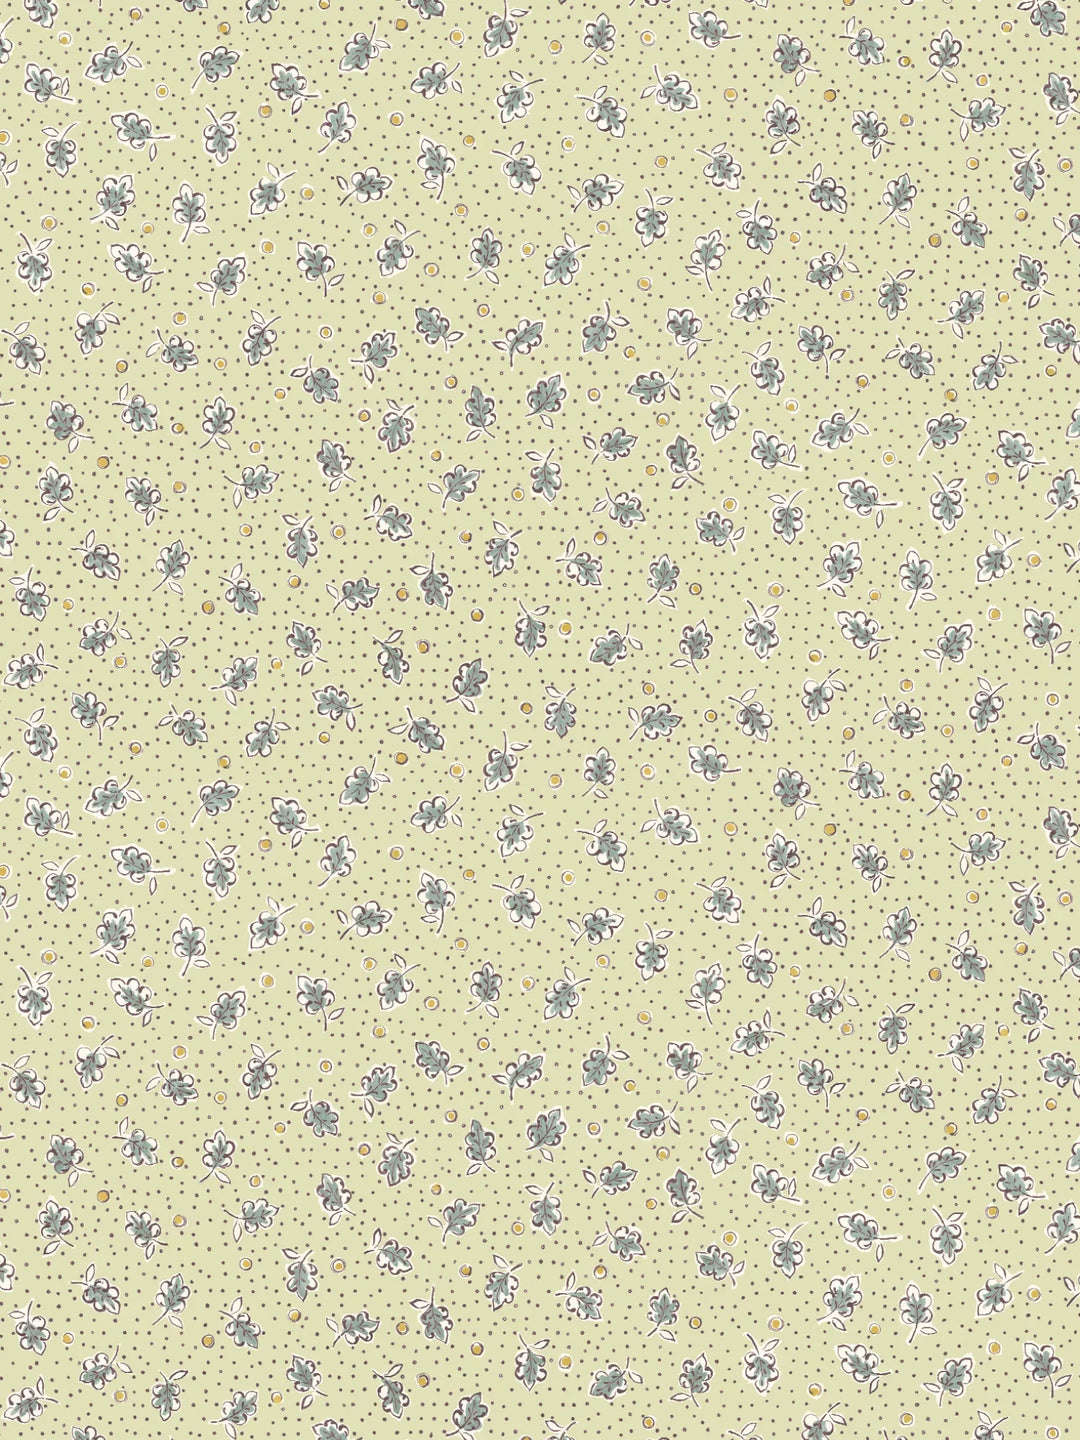 mille-feuilles-wallpaper-pistachio-green-dainty-leaves-dots